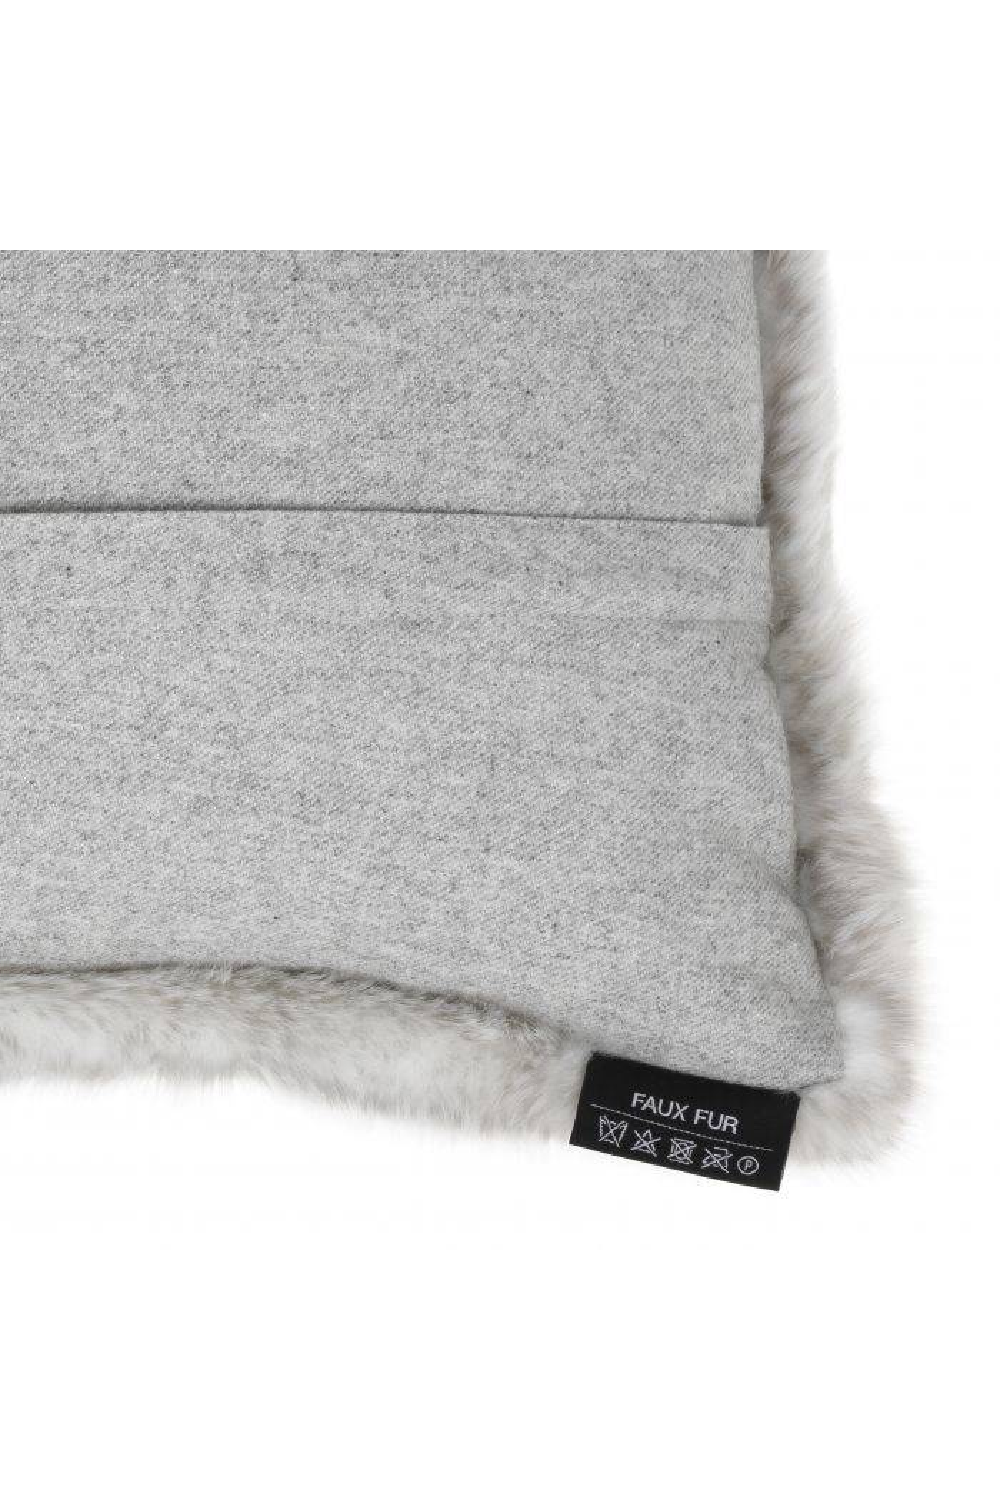 Light Gray Fur Cushion | Eichholtz Alaska | OROA